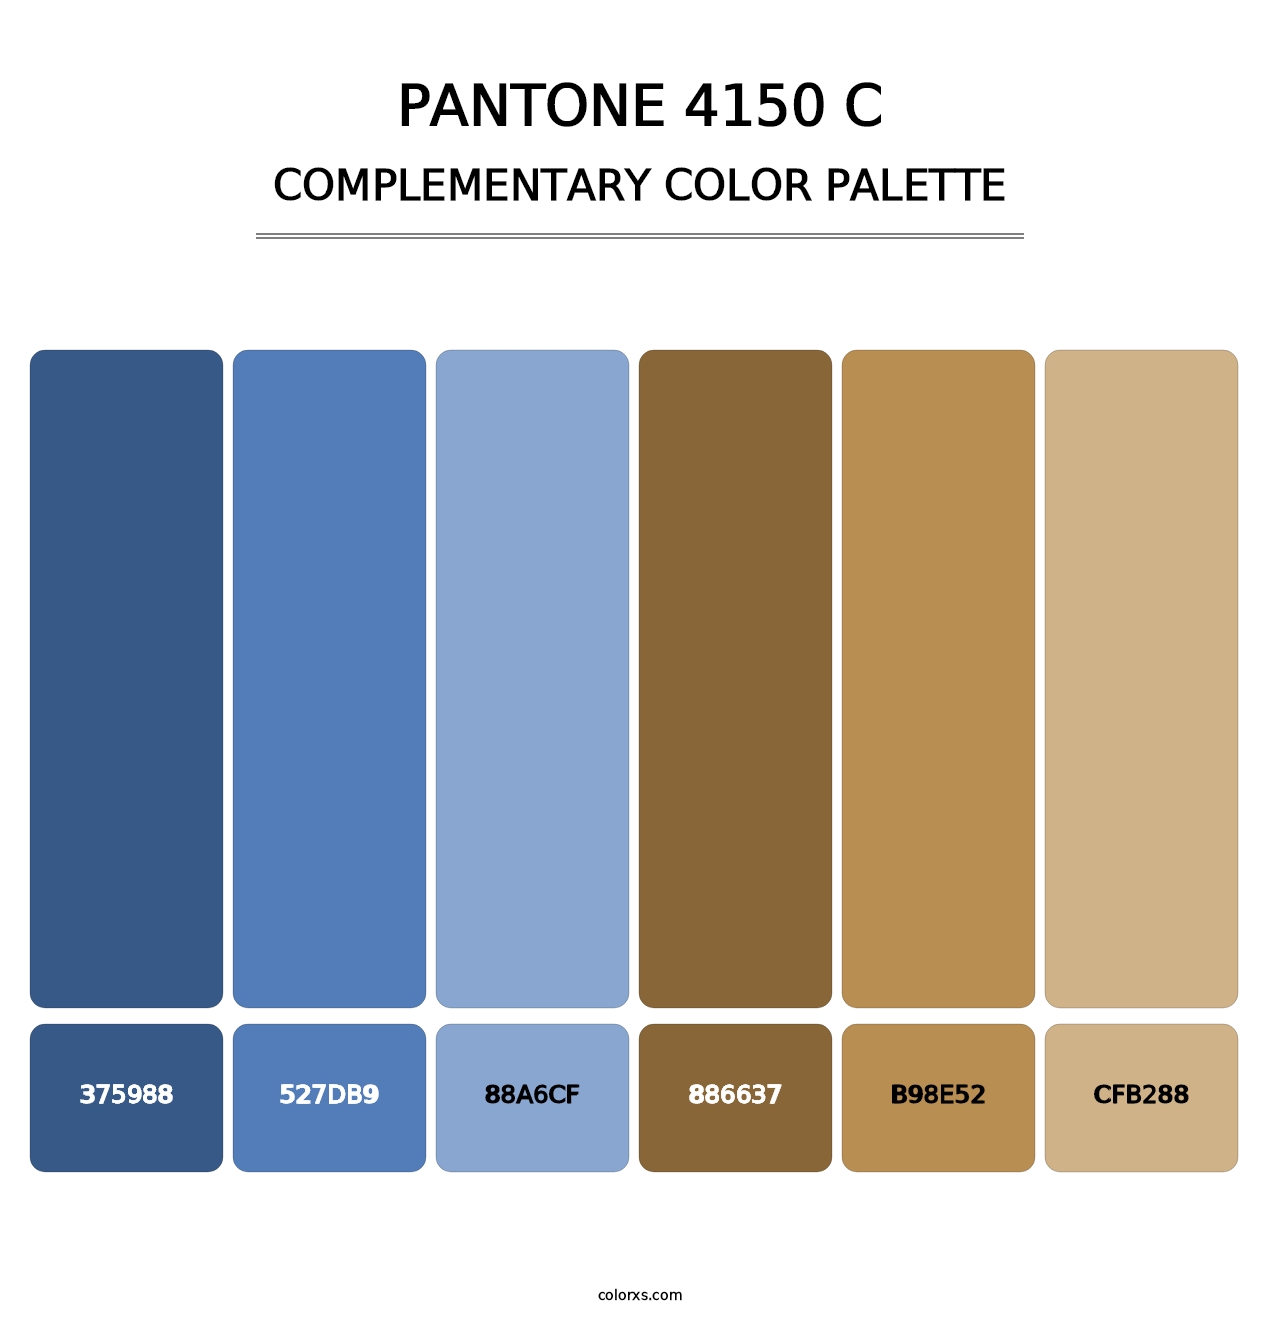 PANTONE 4150 C - Complementary Color Palette